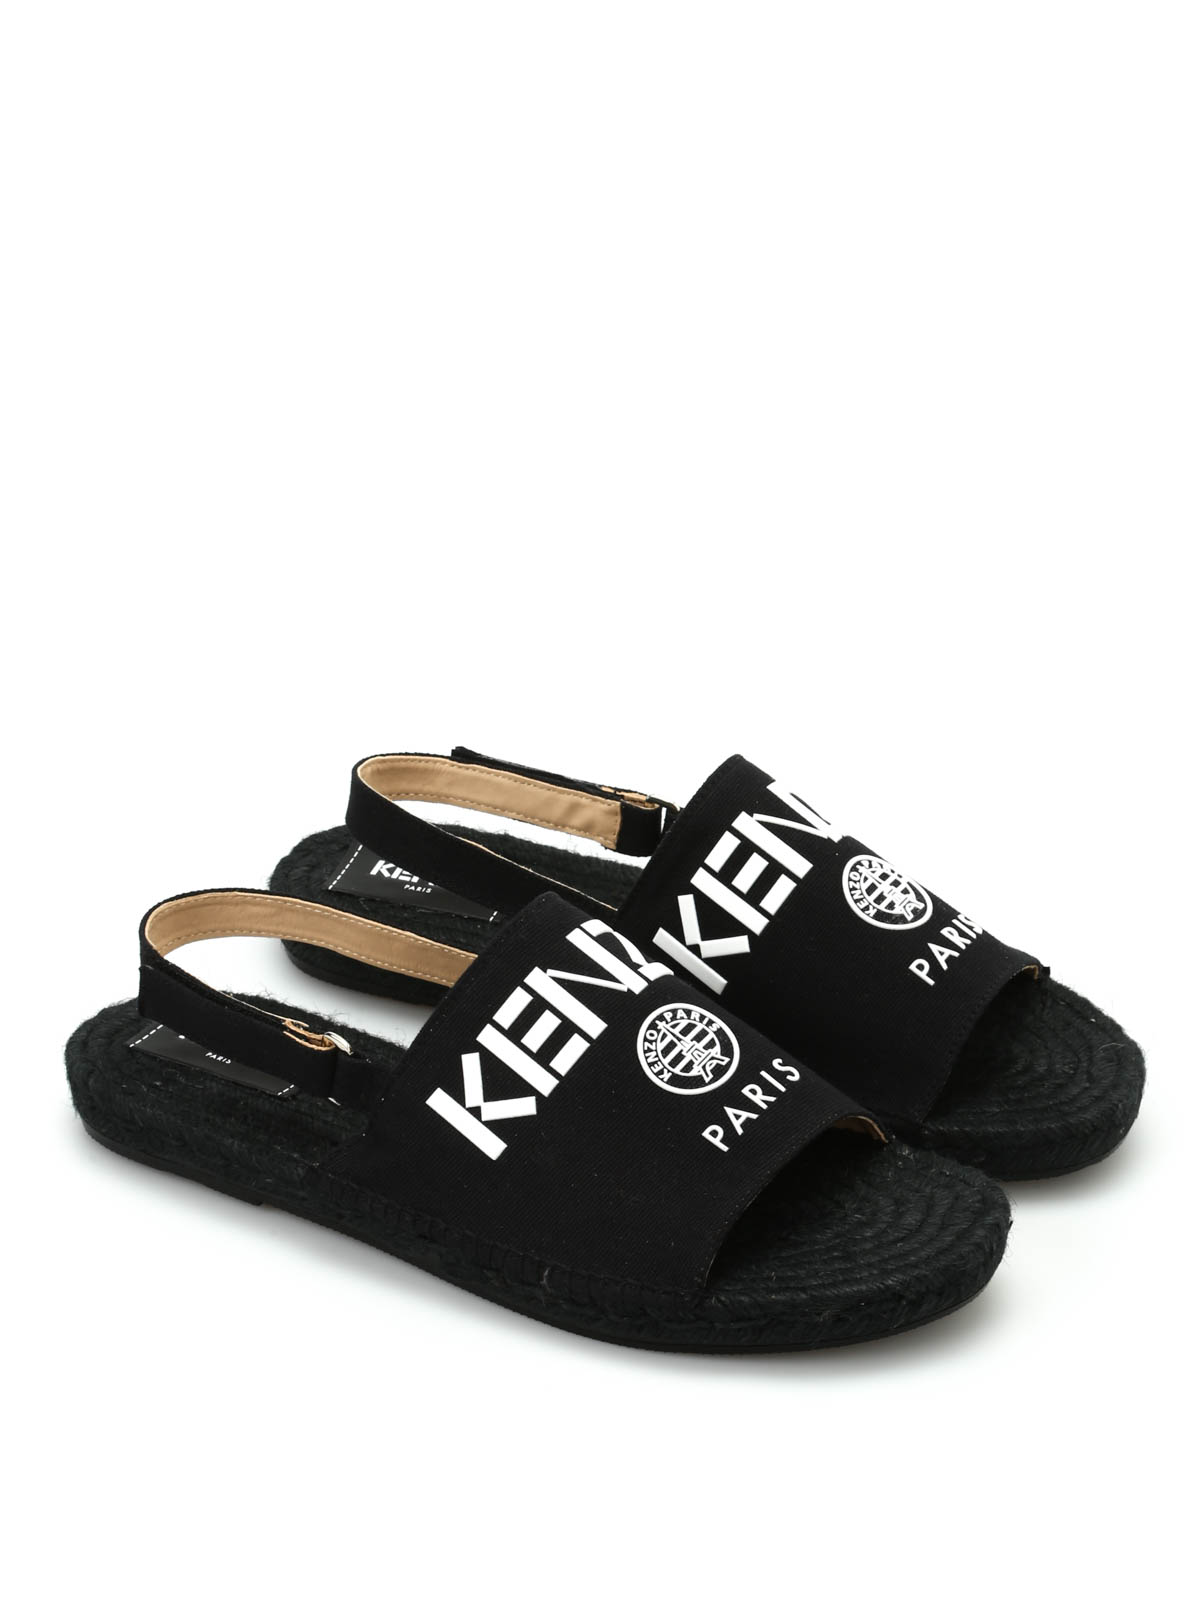 kenzo sandals